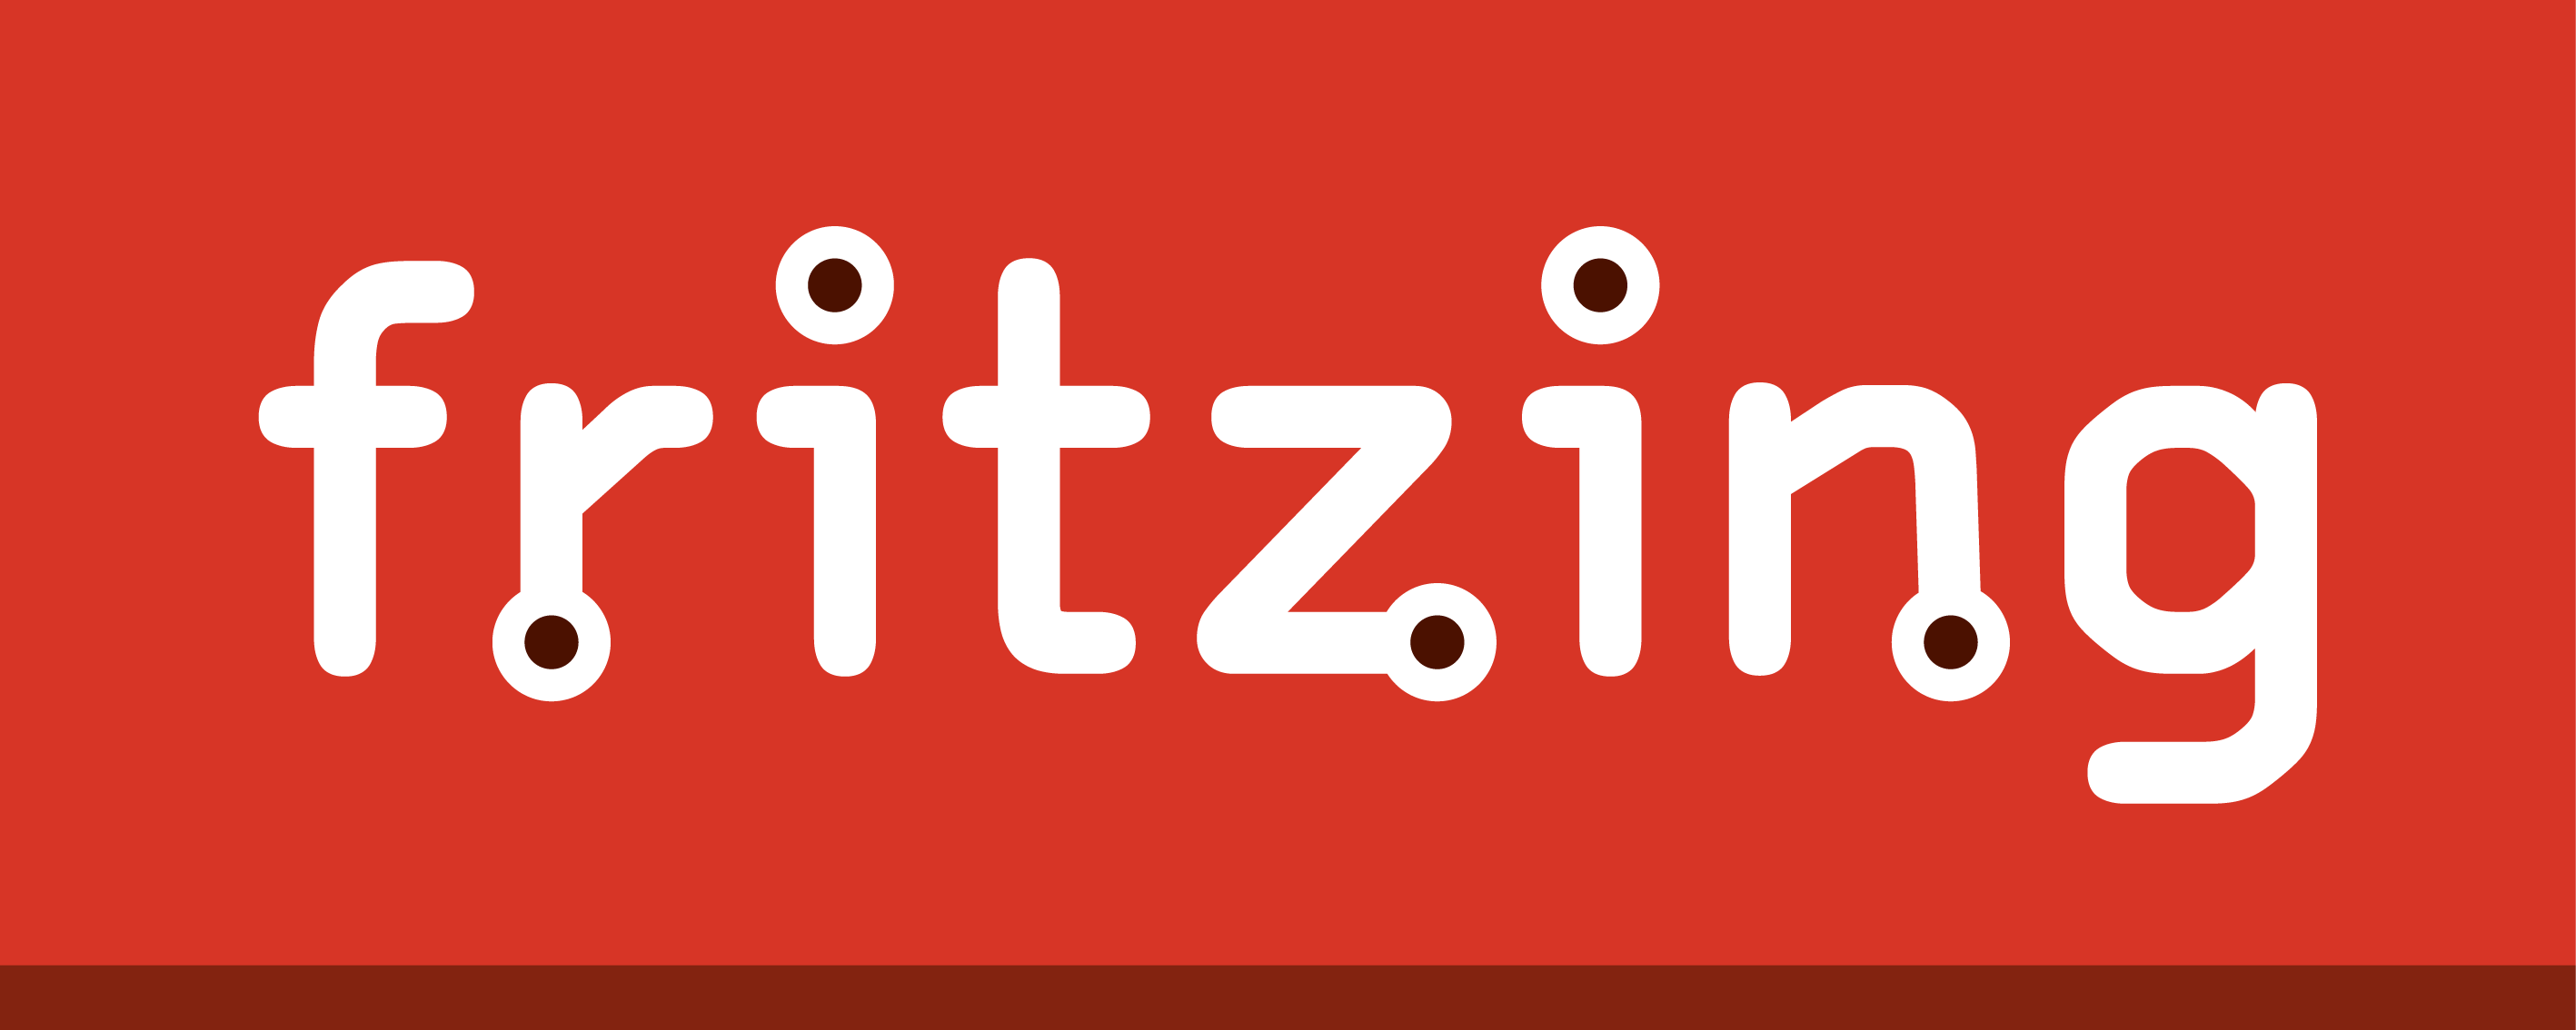 File:Fritzing logo (new).png - Wikimedia Commons